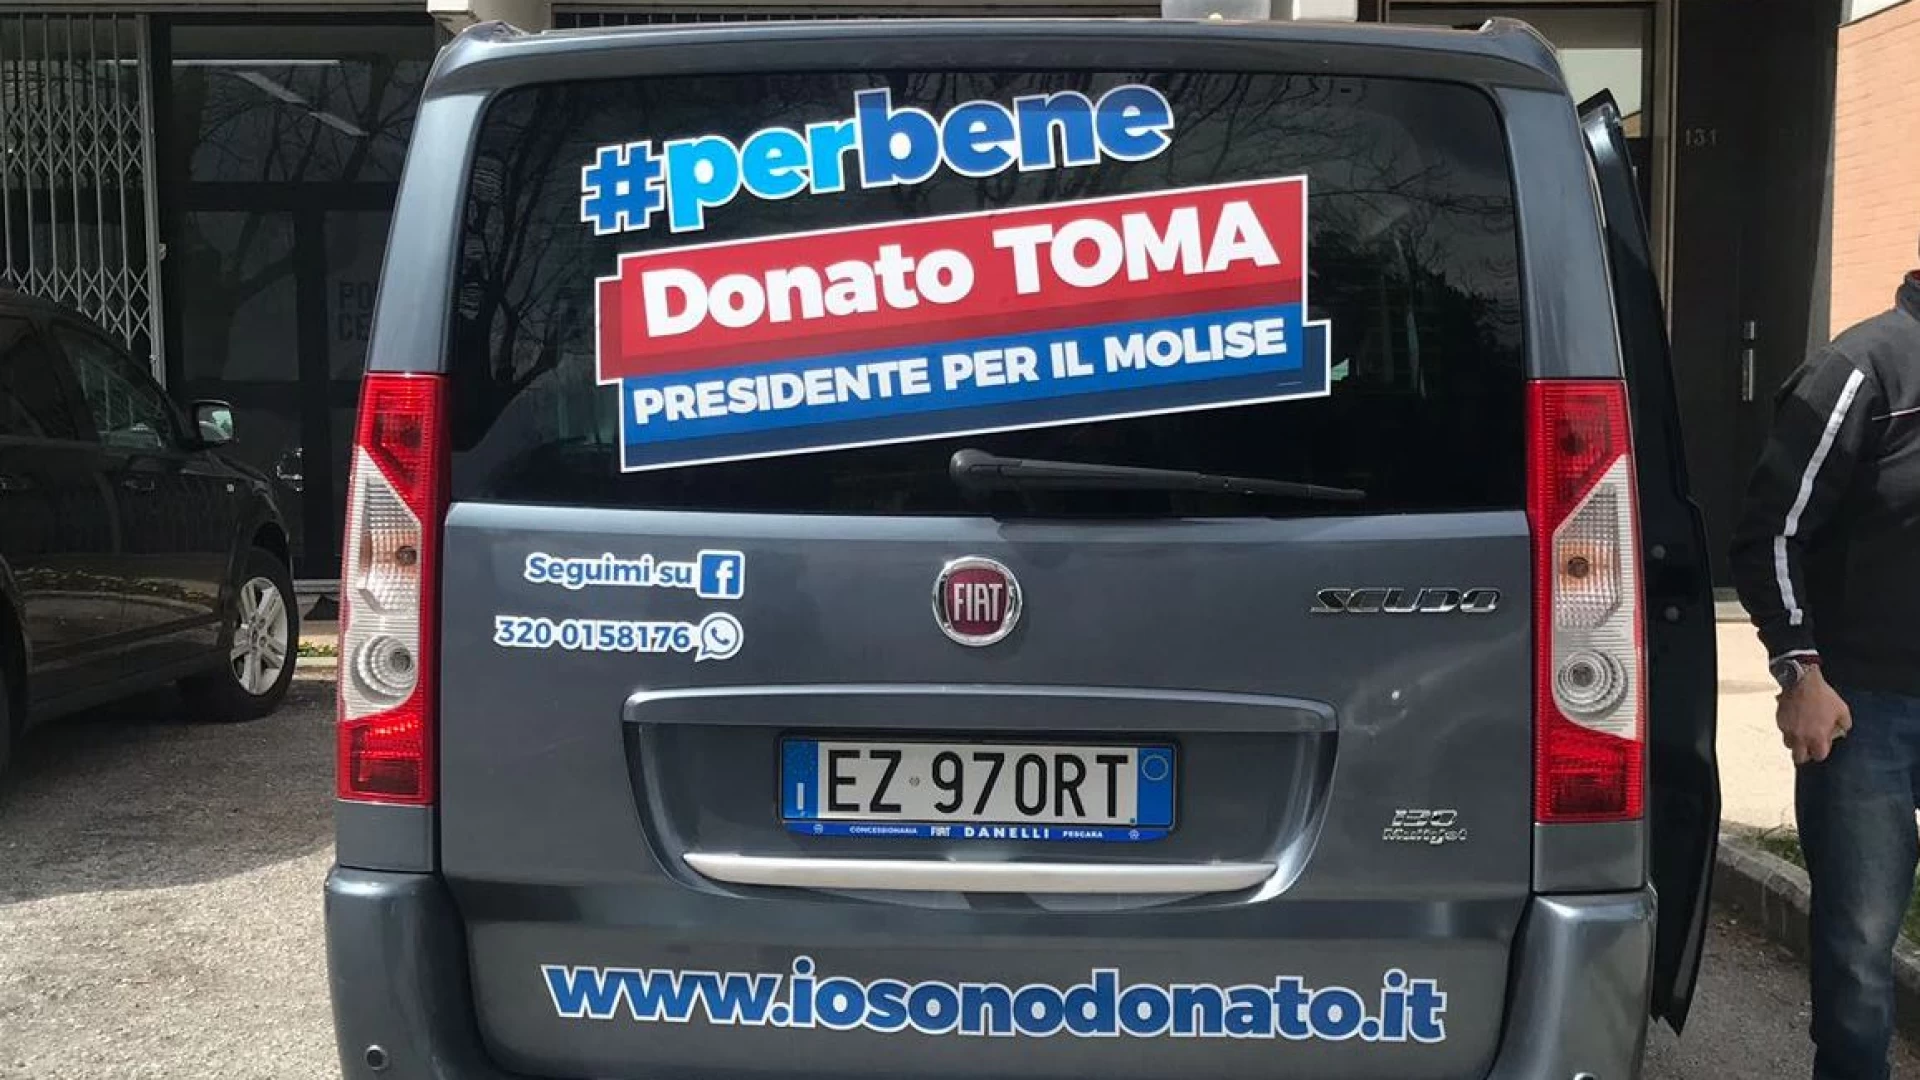 Campobasso, Donato Toma lancia il #perbene tour Molise.